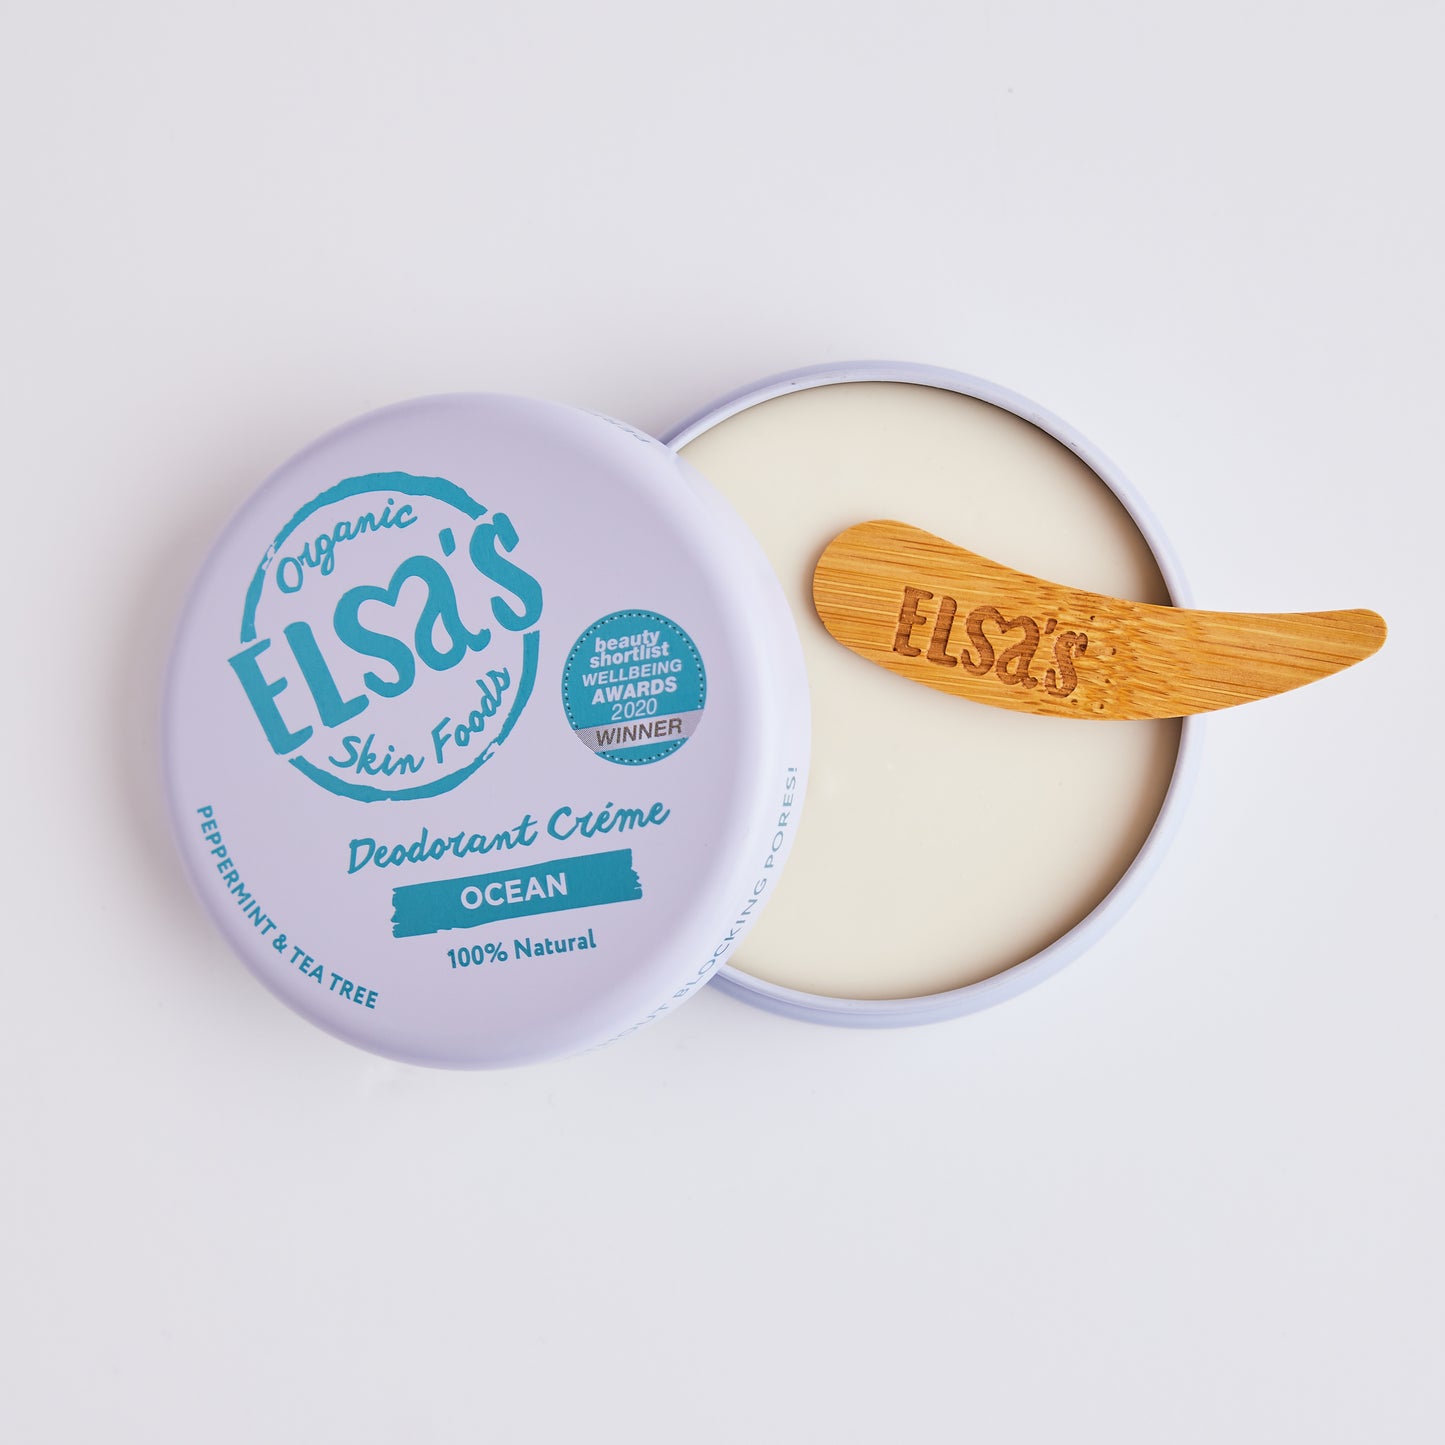 Elsas_Organic_Skinfoods Deodorant Cream Ocean Open 